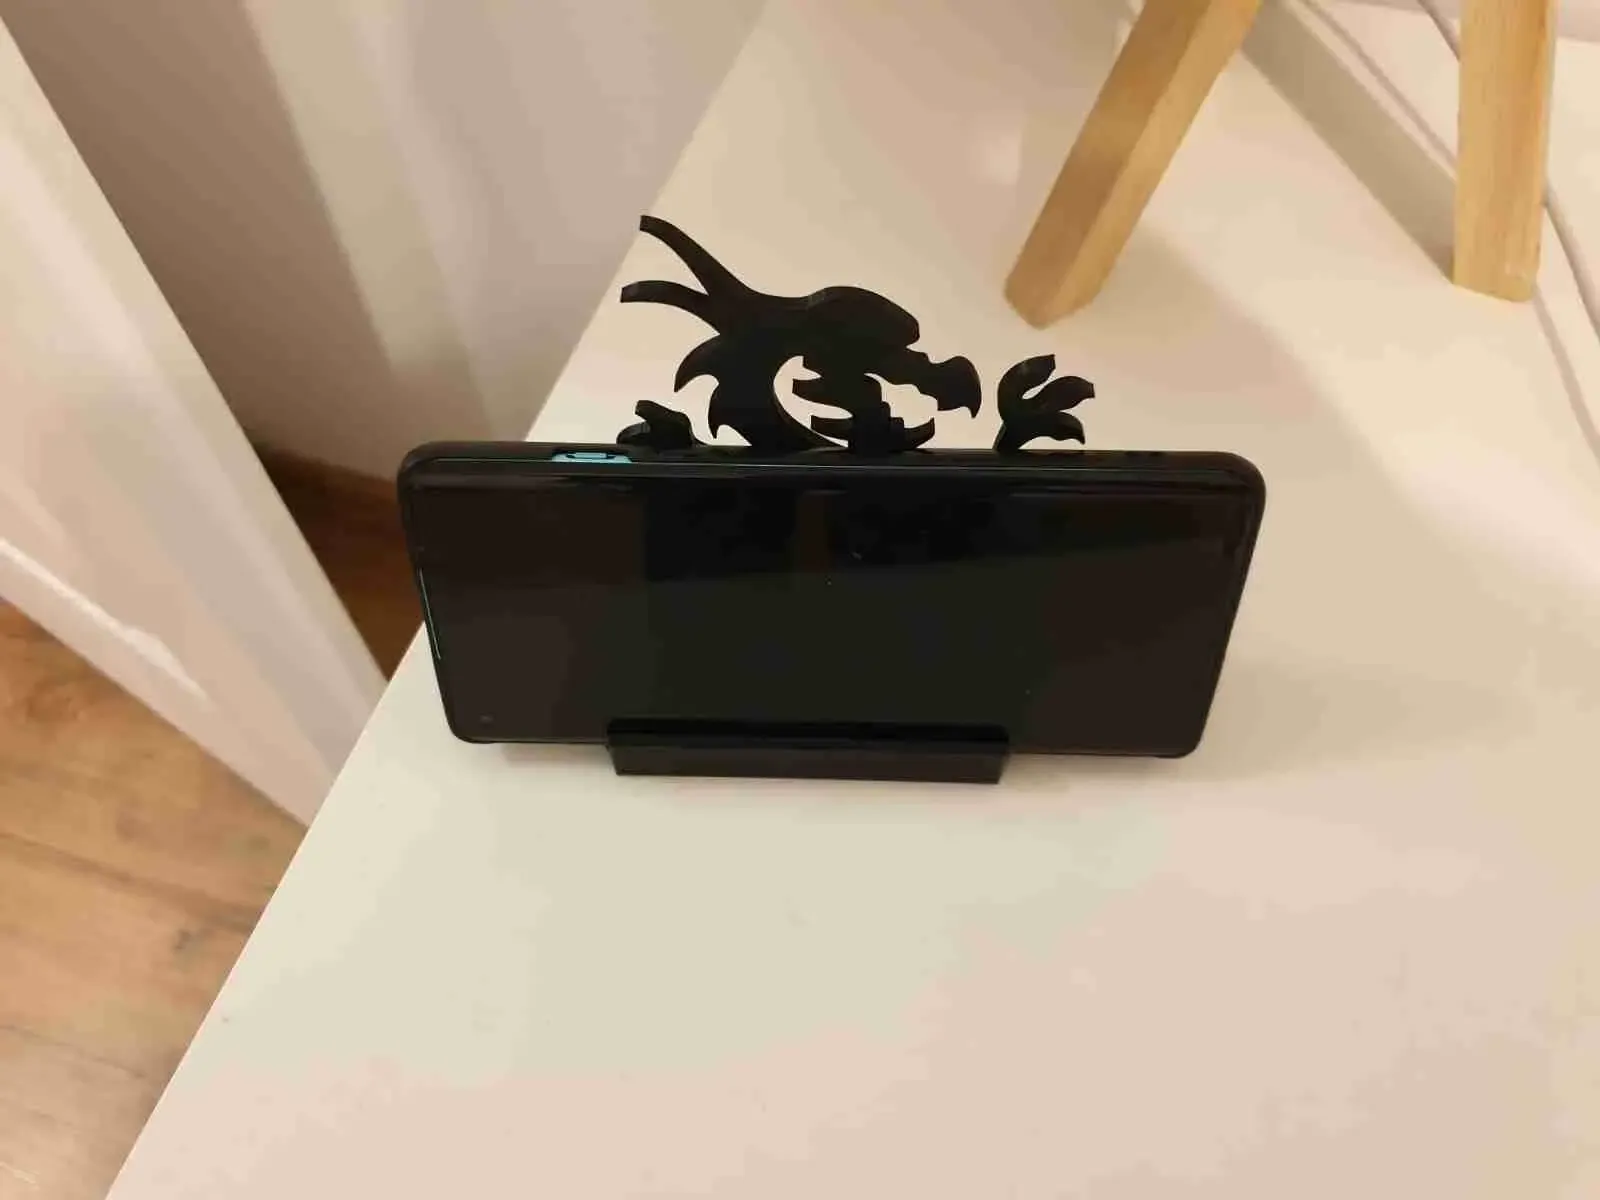 Dragon holder for phone